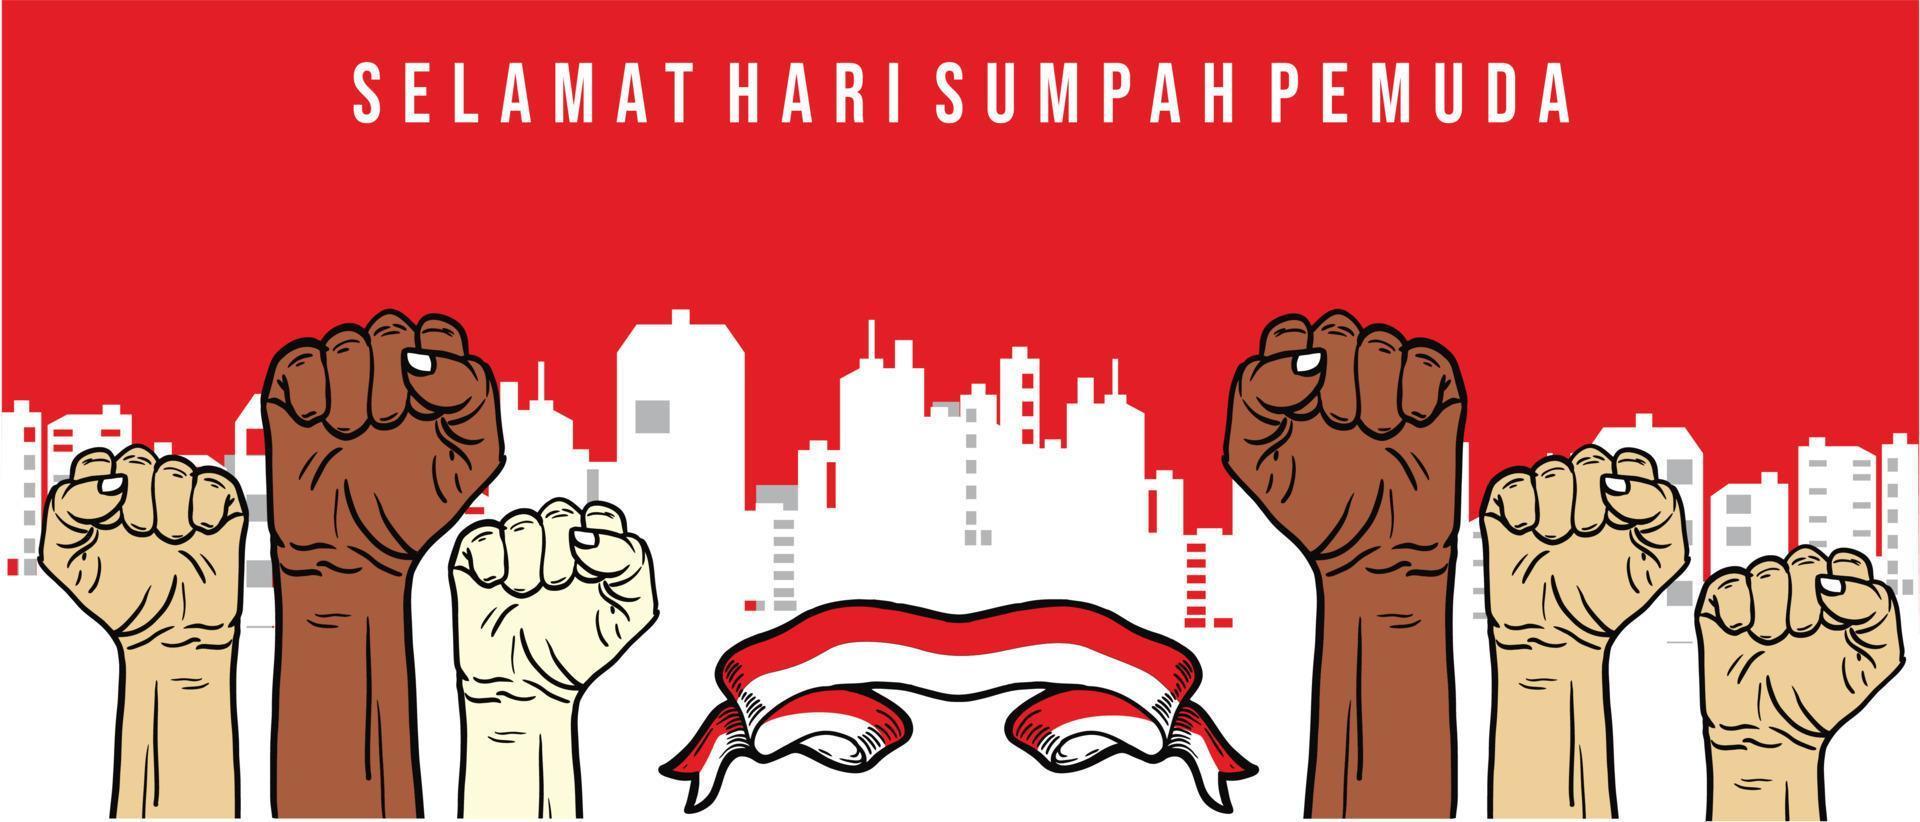 Hari Sumpah Pemuda, 28 Oktober Translation  October 28 Happy Day Youth Pledge of Indonesia vector illustration.